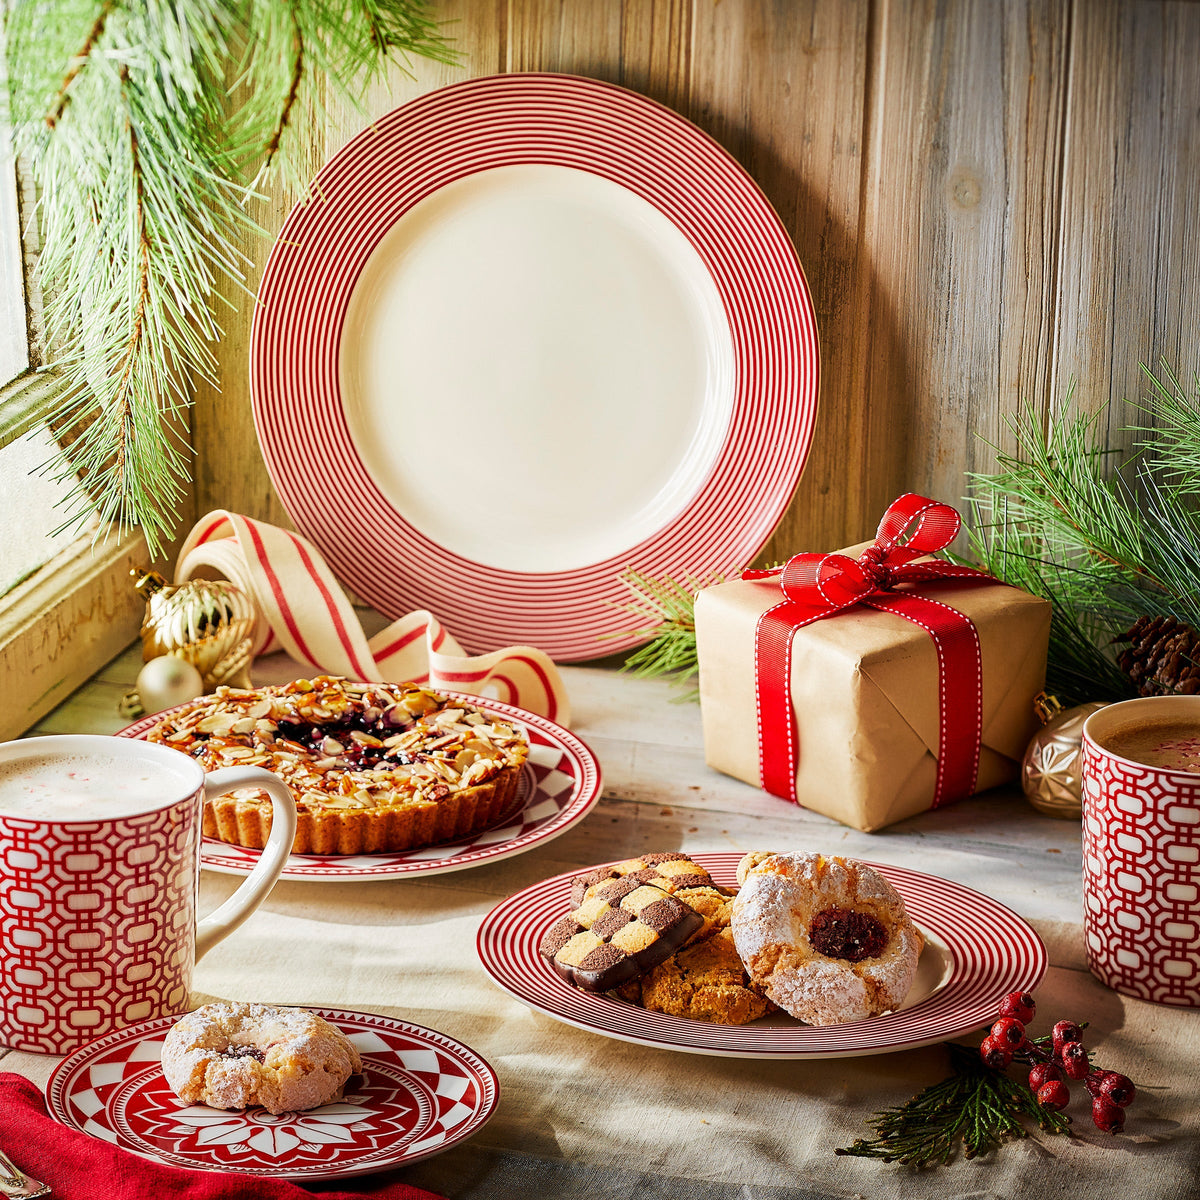 A set of Caskata Artisanal Home Newport Stripe Crimson Salad Plates on a table next to a Christmas tree.